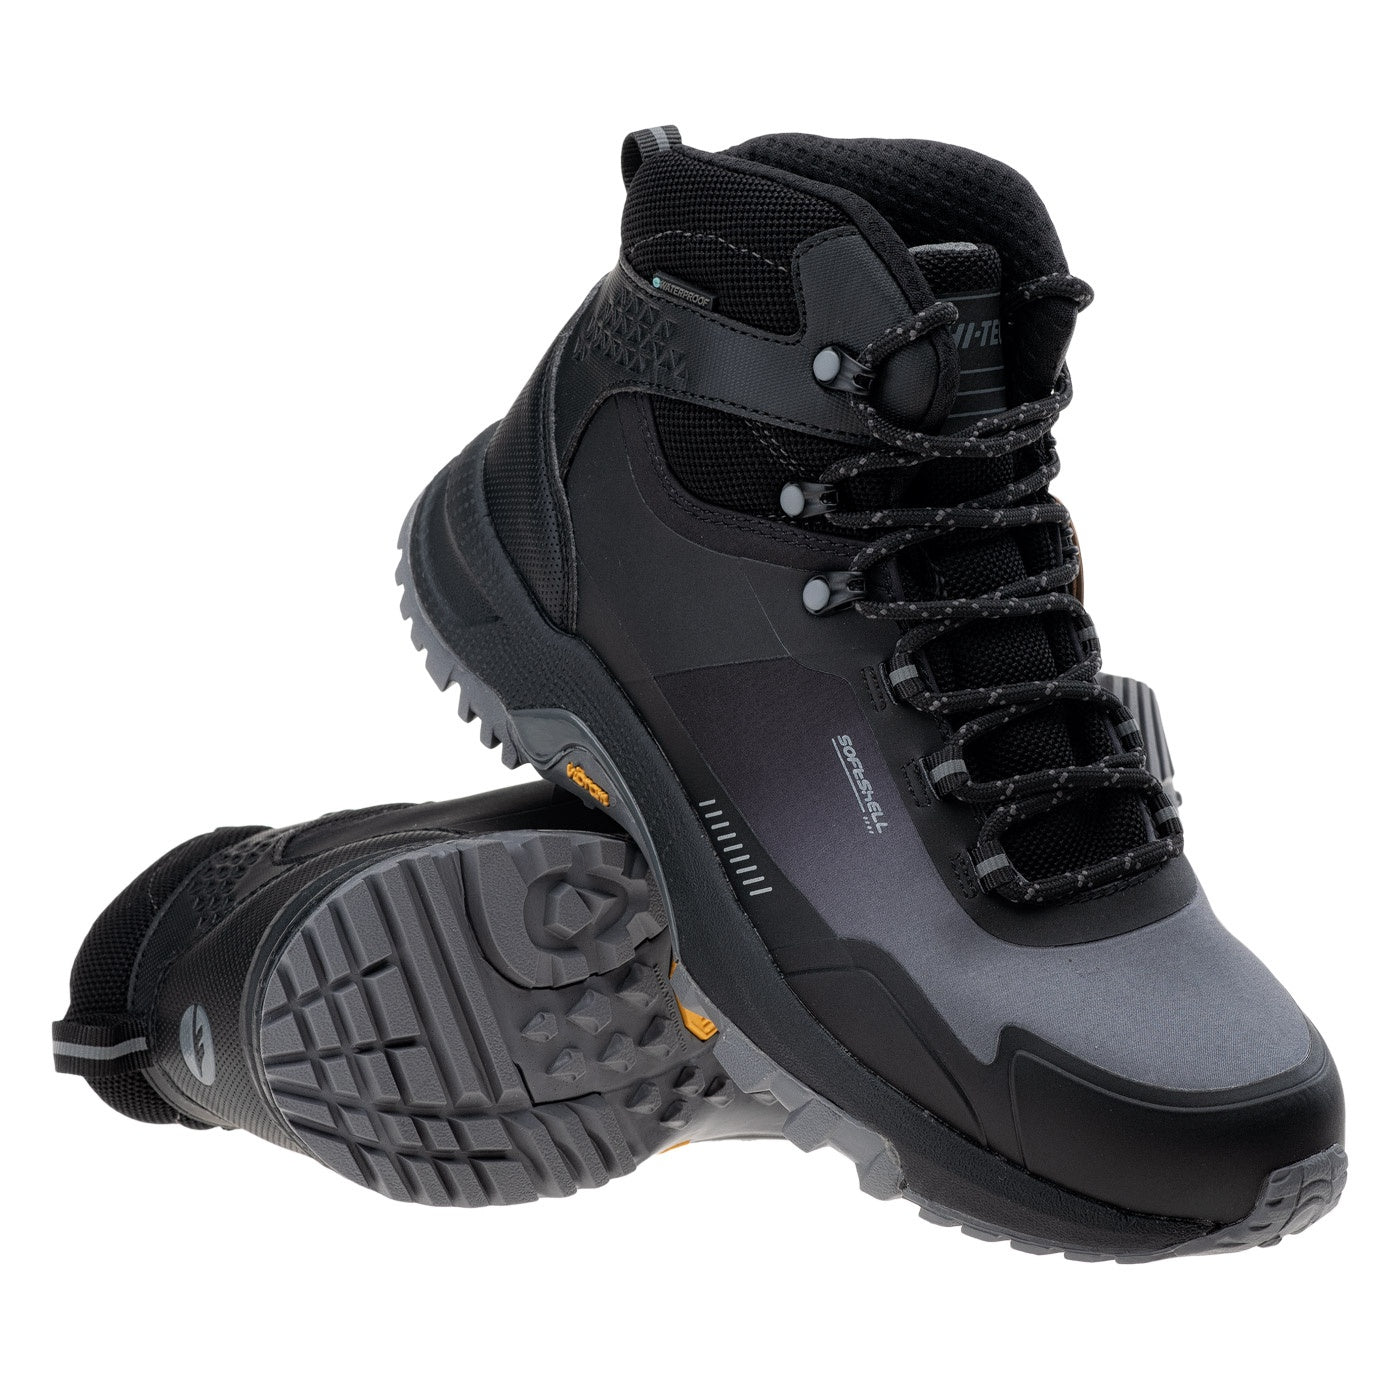 crne muske cipele za planinarenje